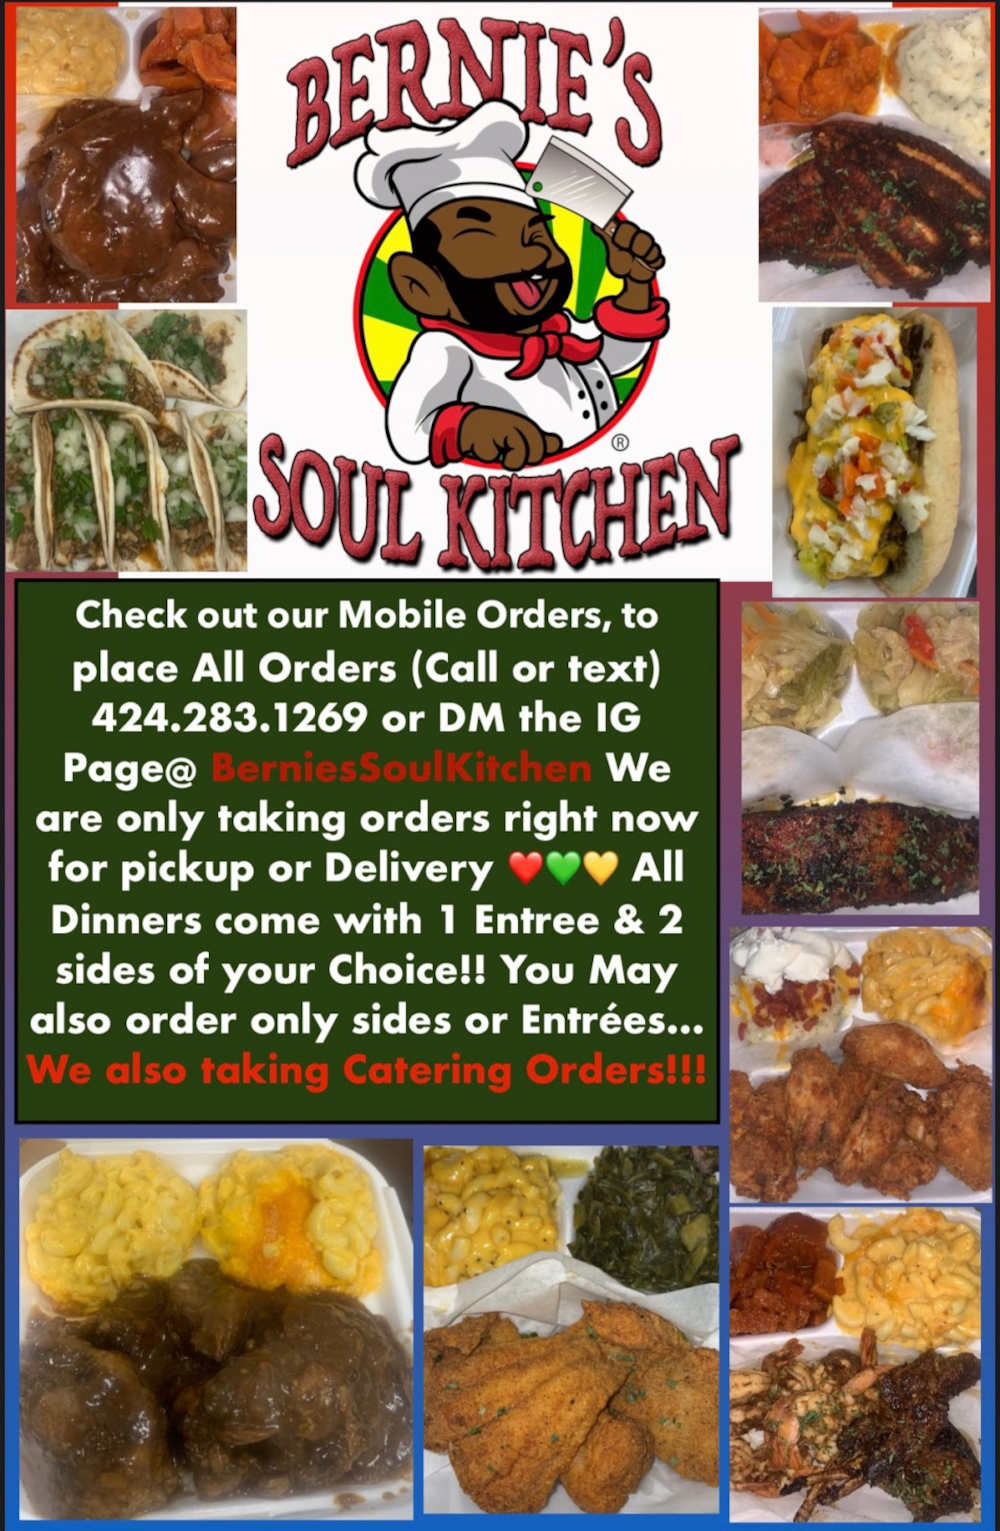 Bernie's Soul Kitchen, order info flyer